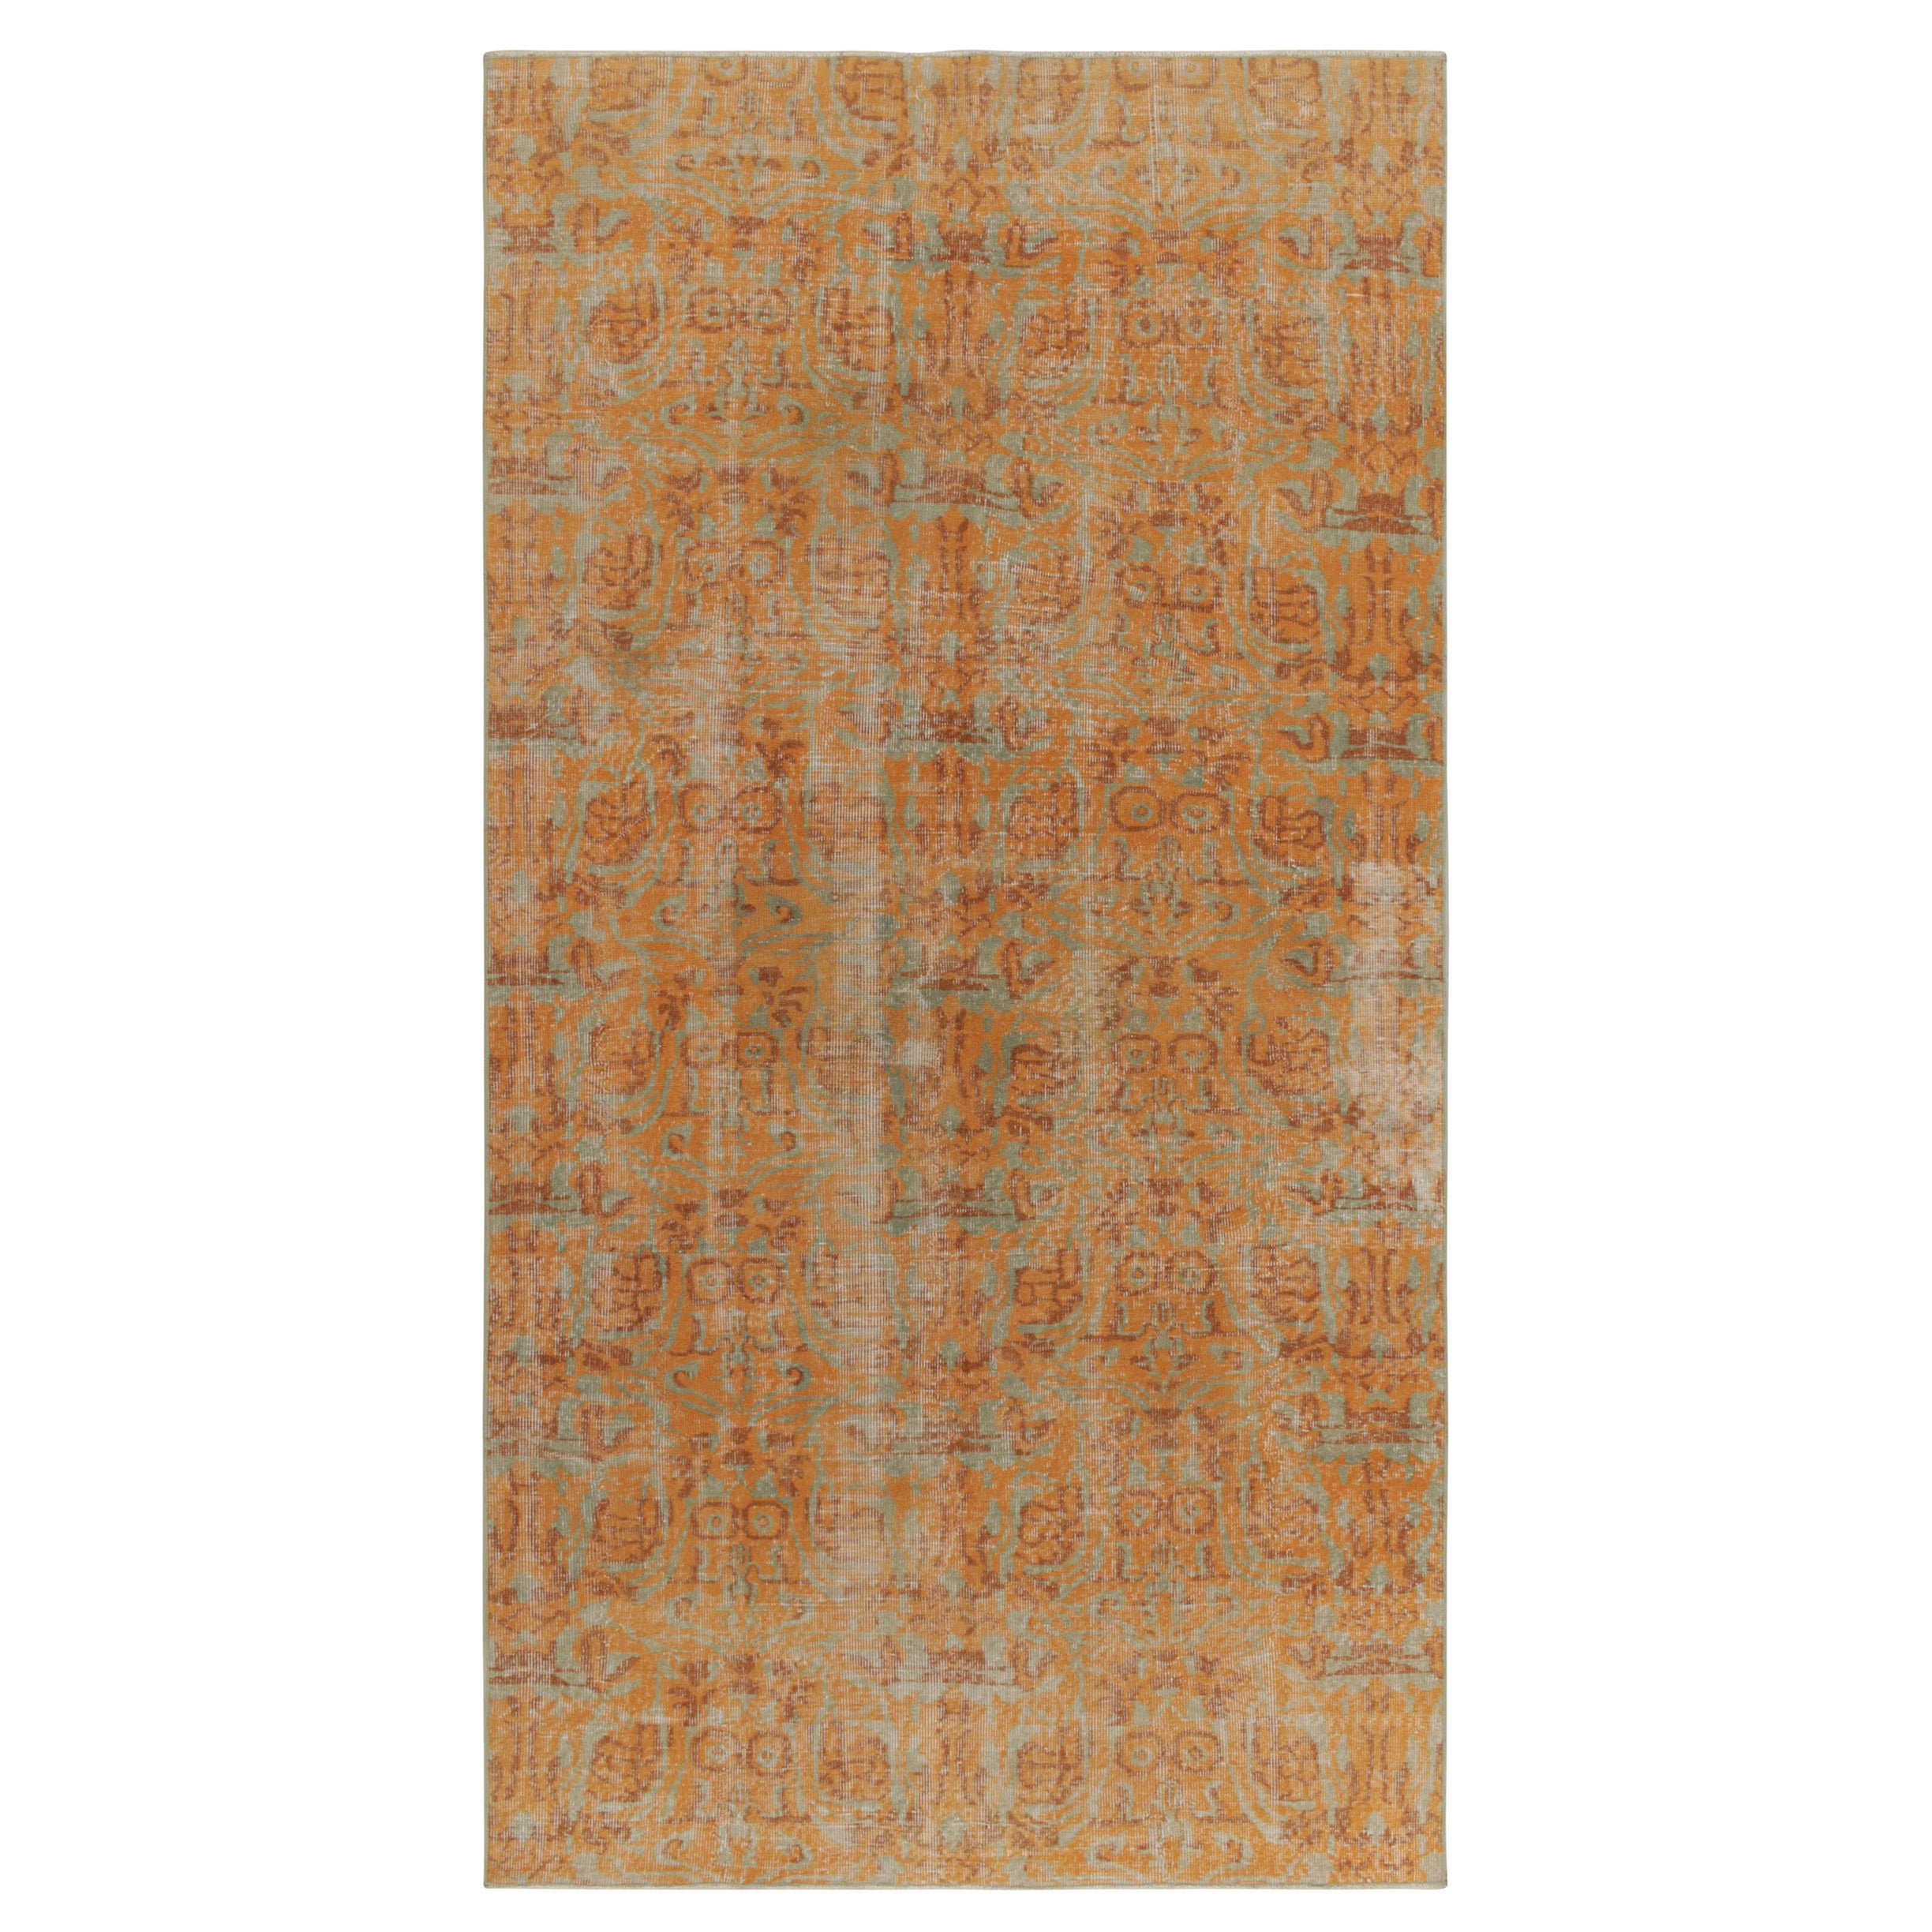 1960s Vintage Distressed Rug in Orange, Brown Abstract Patterns by Rug & Kilim For Sale